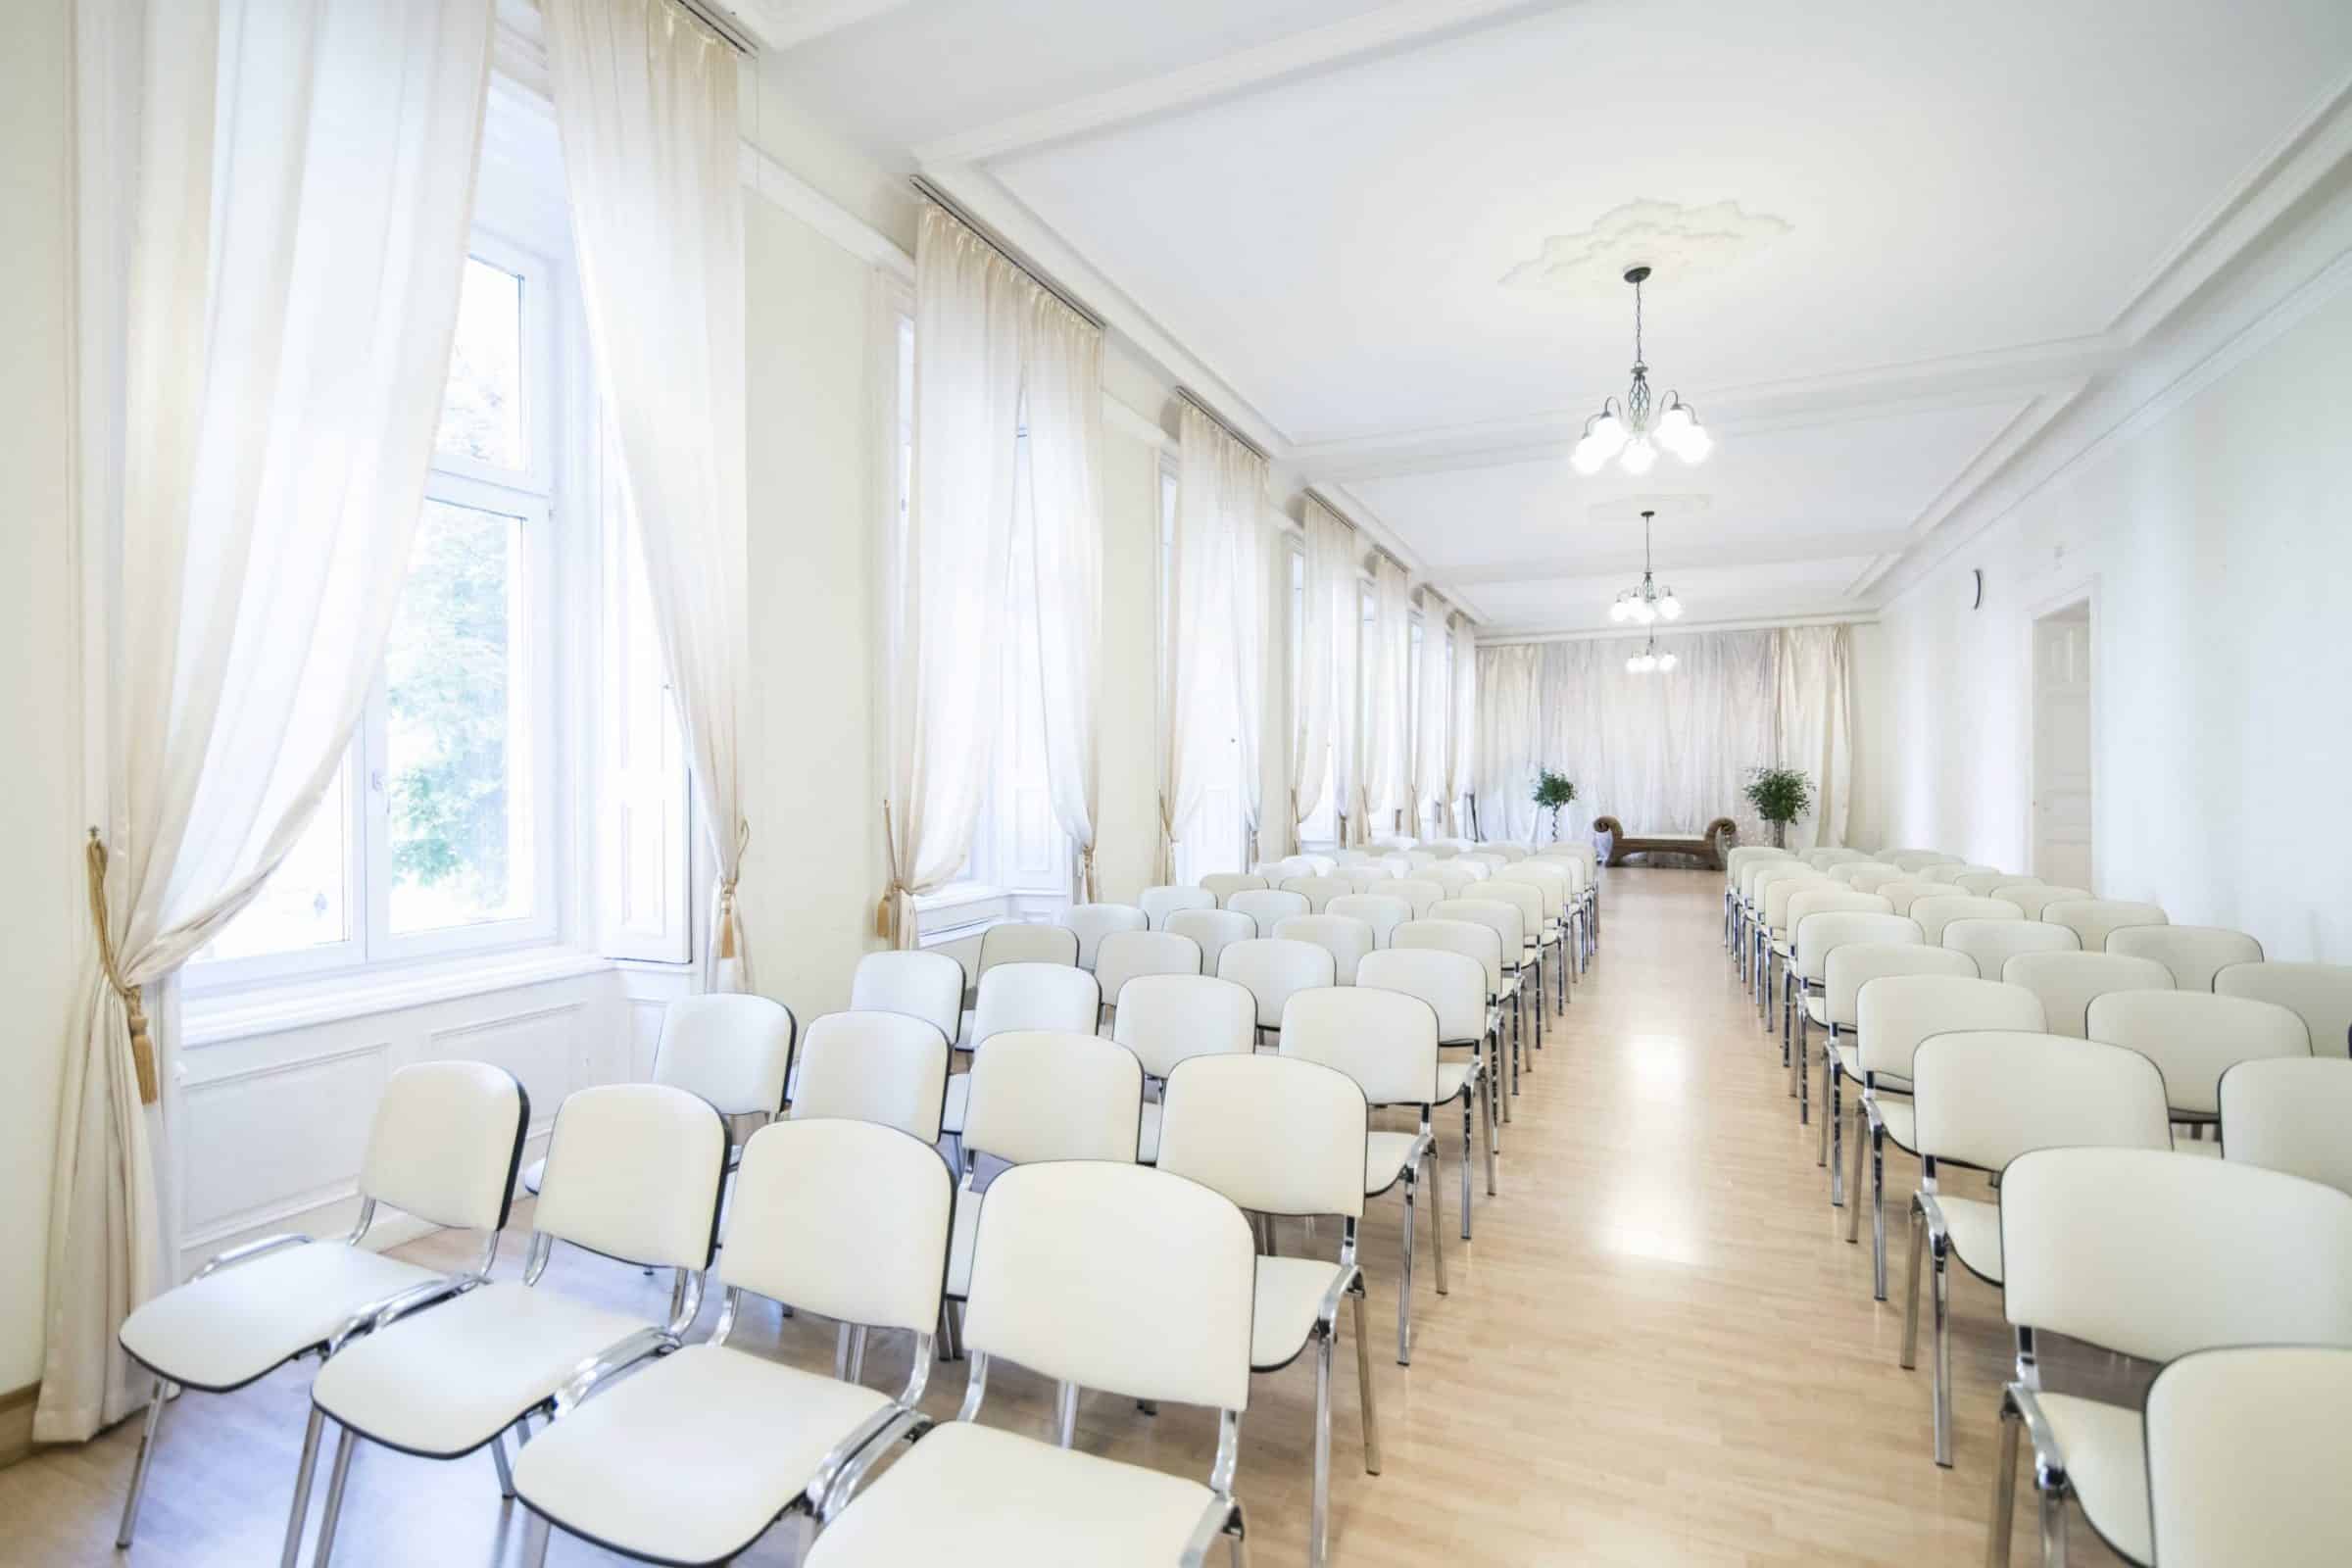 Bókay Great Hall - Harmonia Palace Budapest Meetings and Events